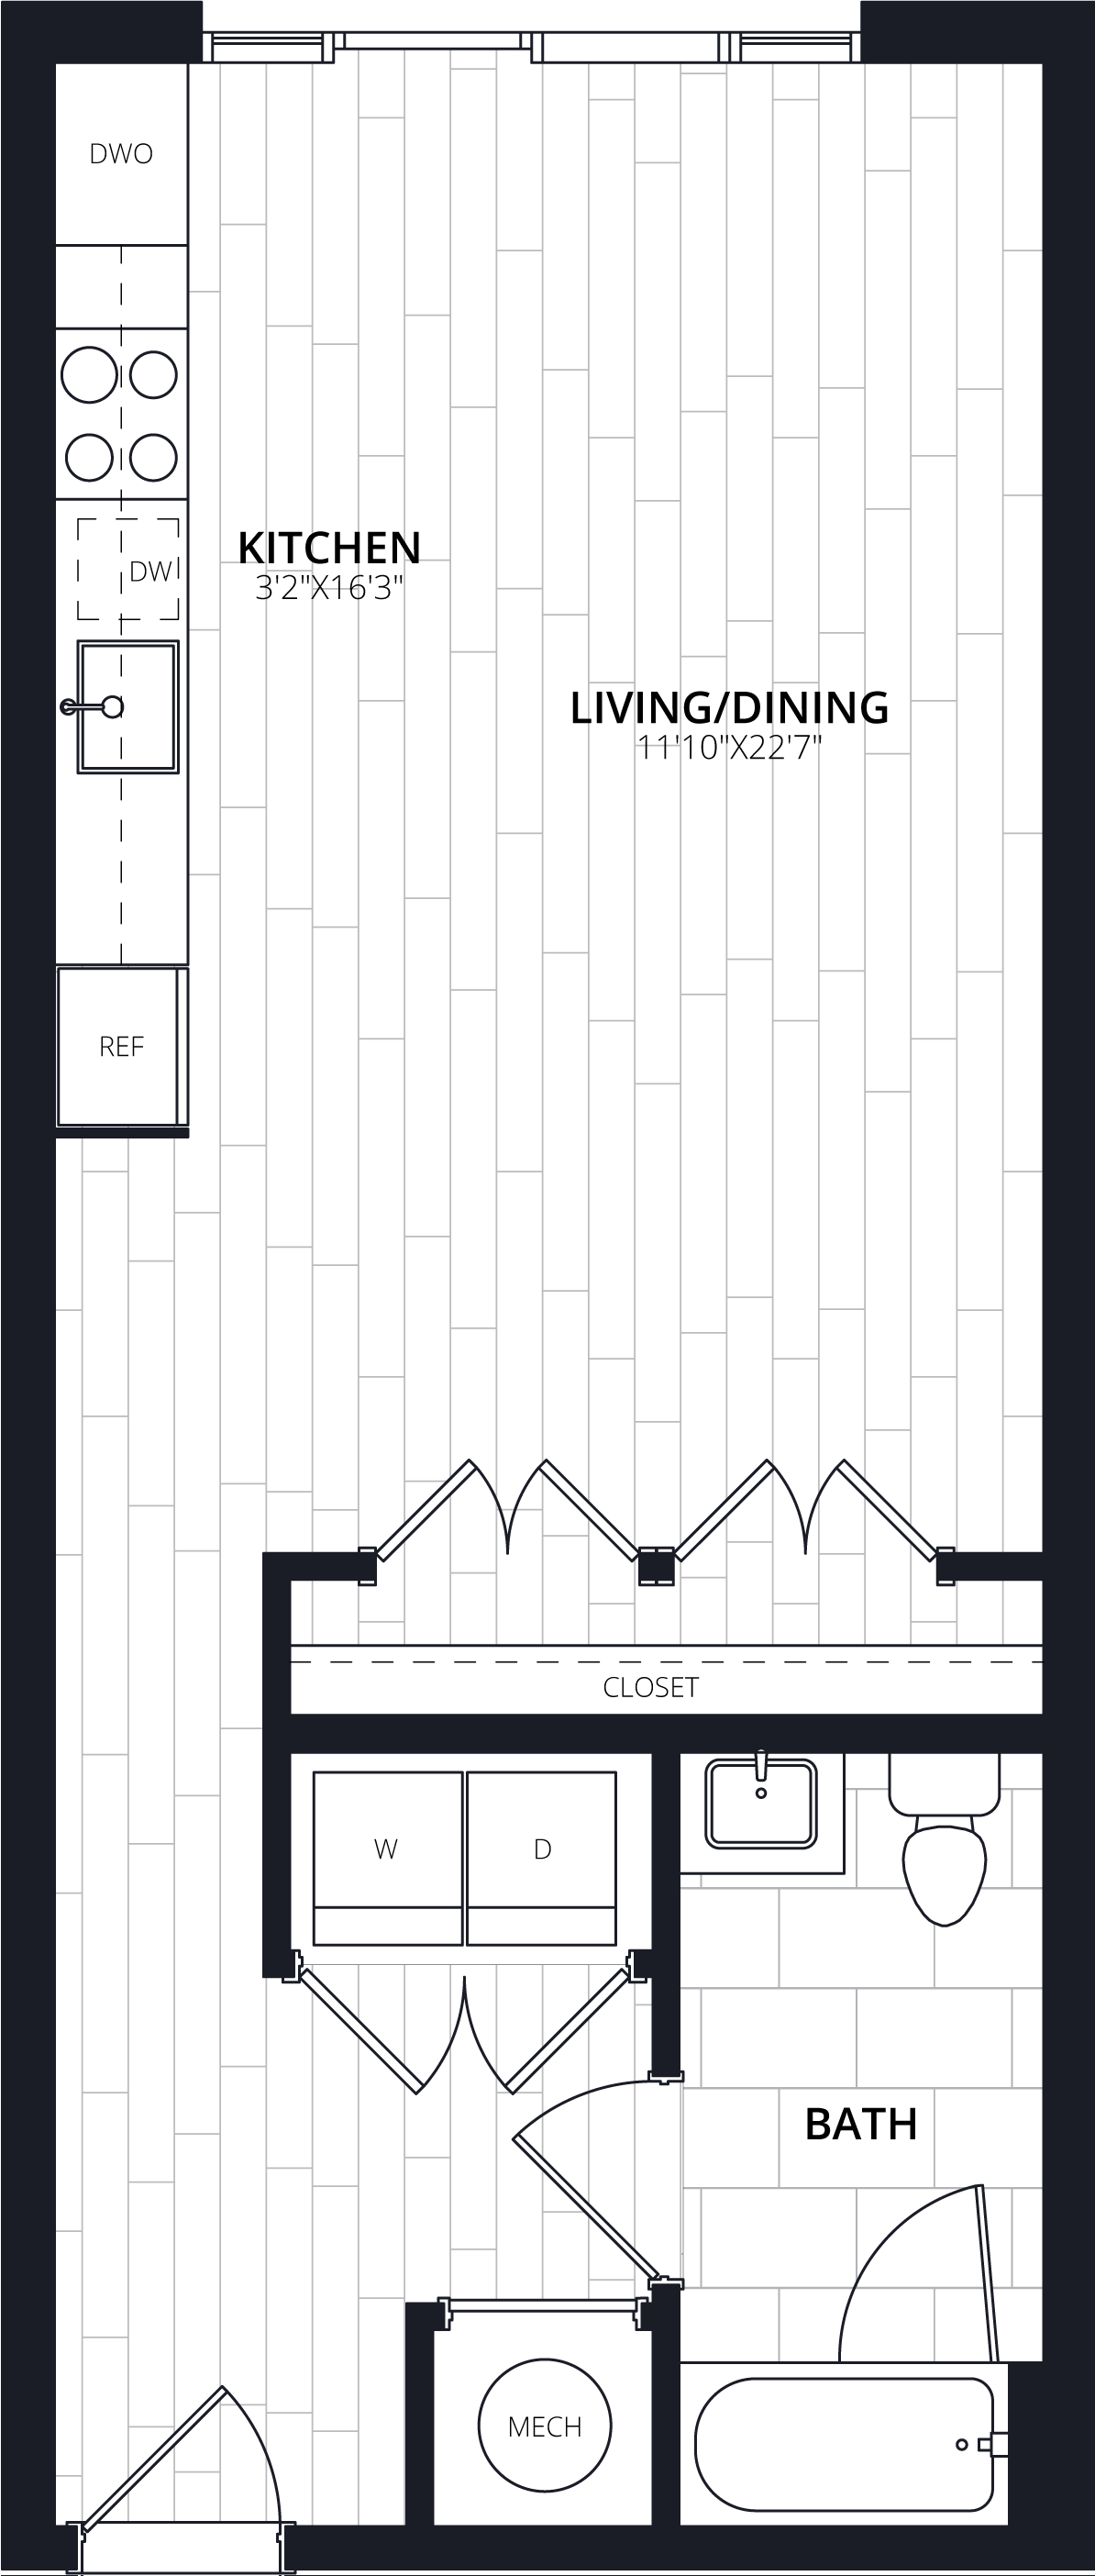 Floorplan image of apartment 221